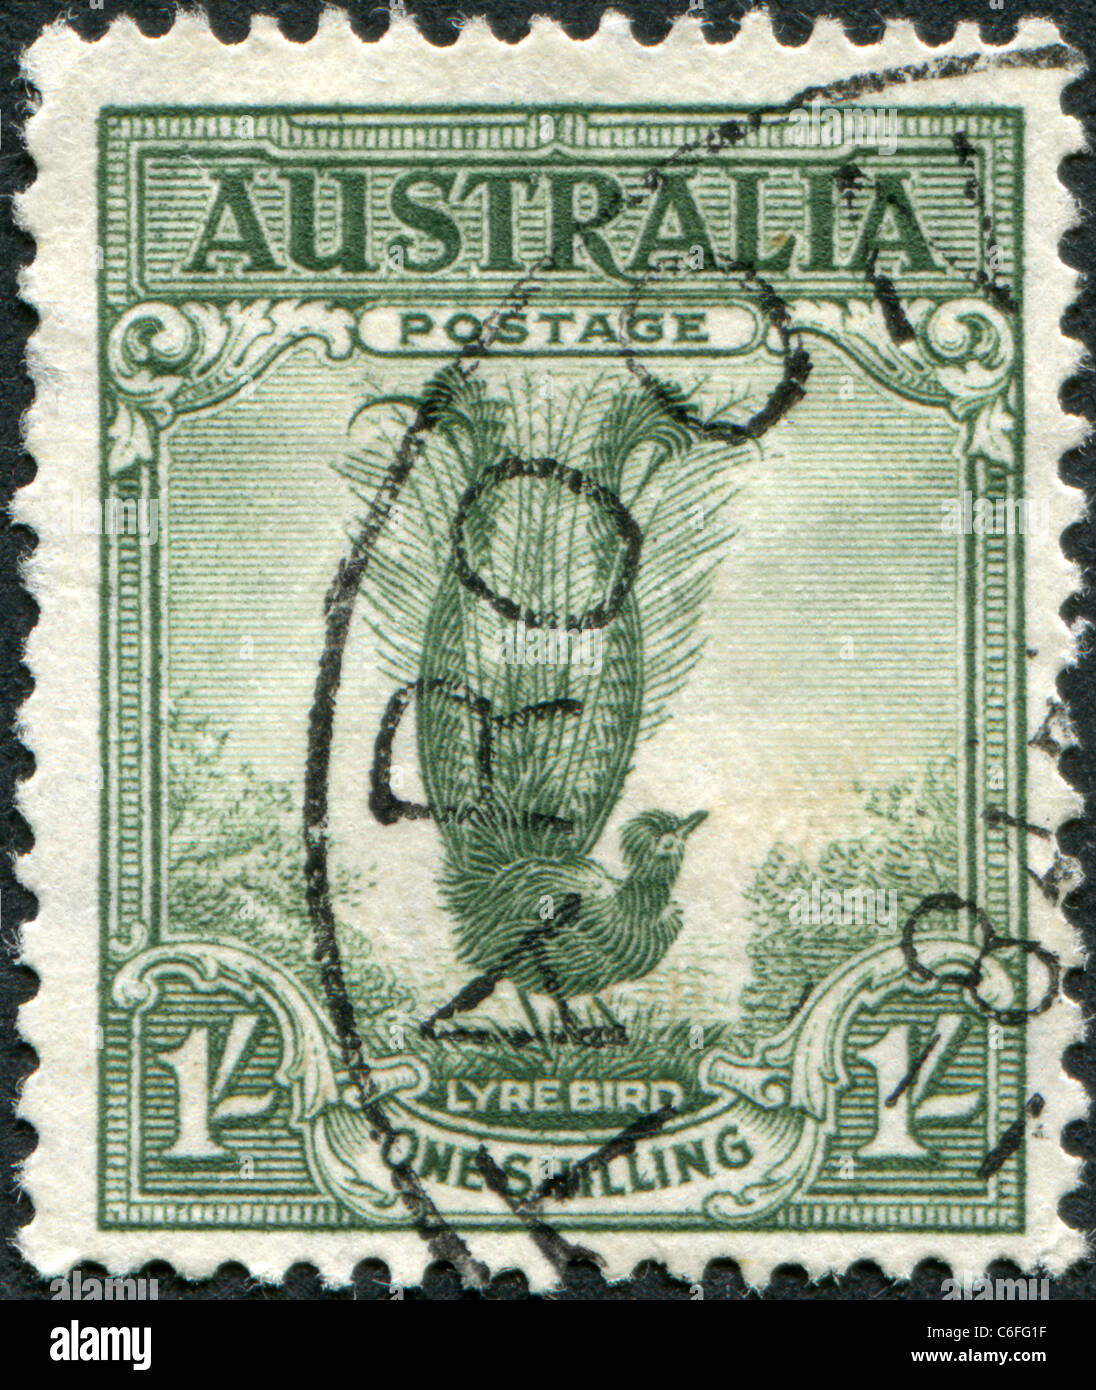 AUSTRALIA - 1937: A stamp printed in Australia, shows the Superb Lyrebird (Menura novaehollandiae) Stock Photo